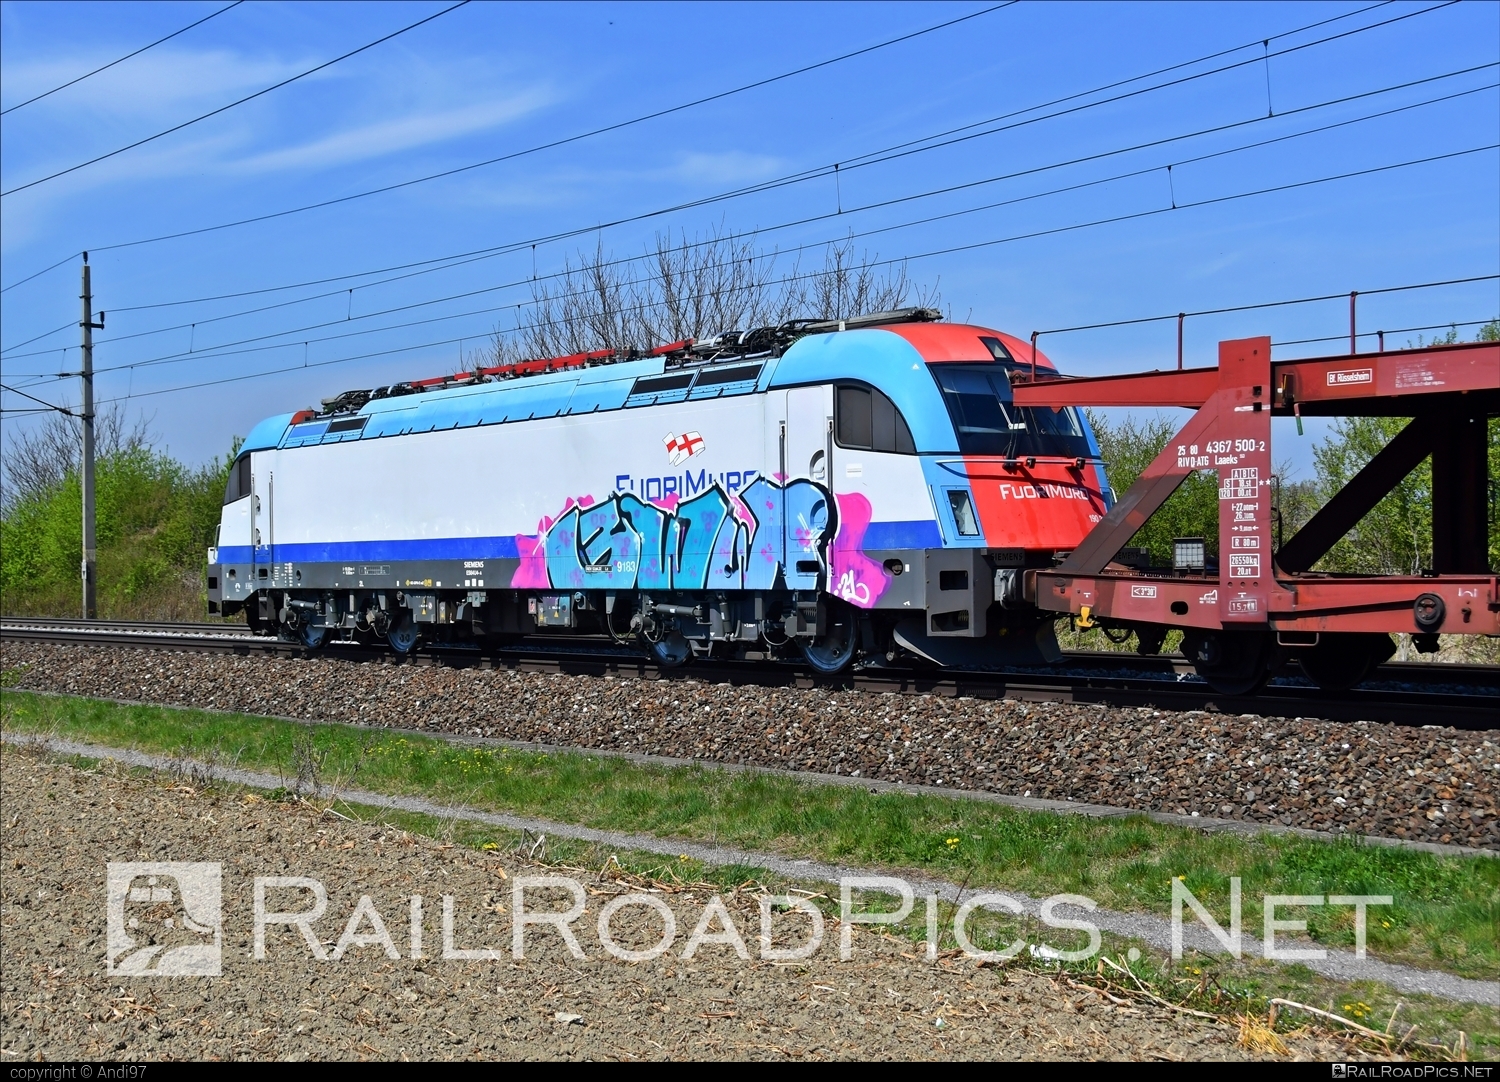 Siemens ES 64 U4 - 190 314 operated by FuoriMuro Servizi Portuali e Ferroviari S.r.l. #es64 #es64u4 #eurosprinter #fuorimuro #graffiti #inrail #inrailSpa #siemens #siemensEs64 #siemensEs64u4 #siemenstaurus #taurus #tauruslocomotive